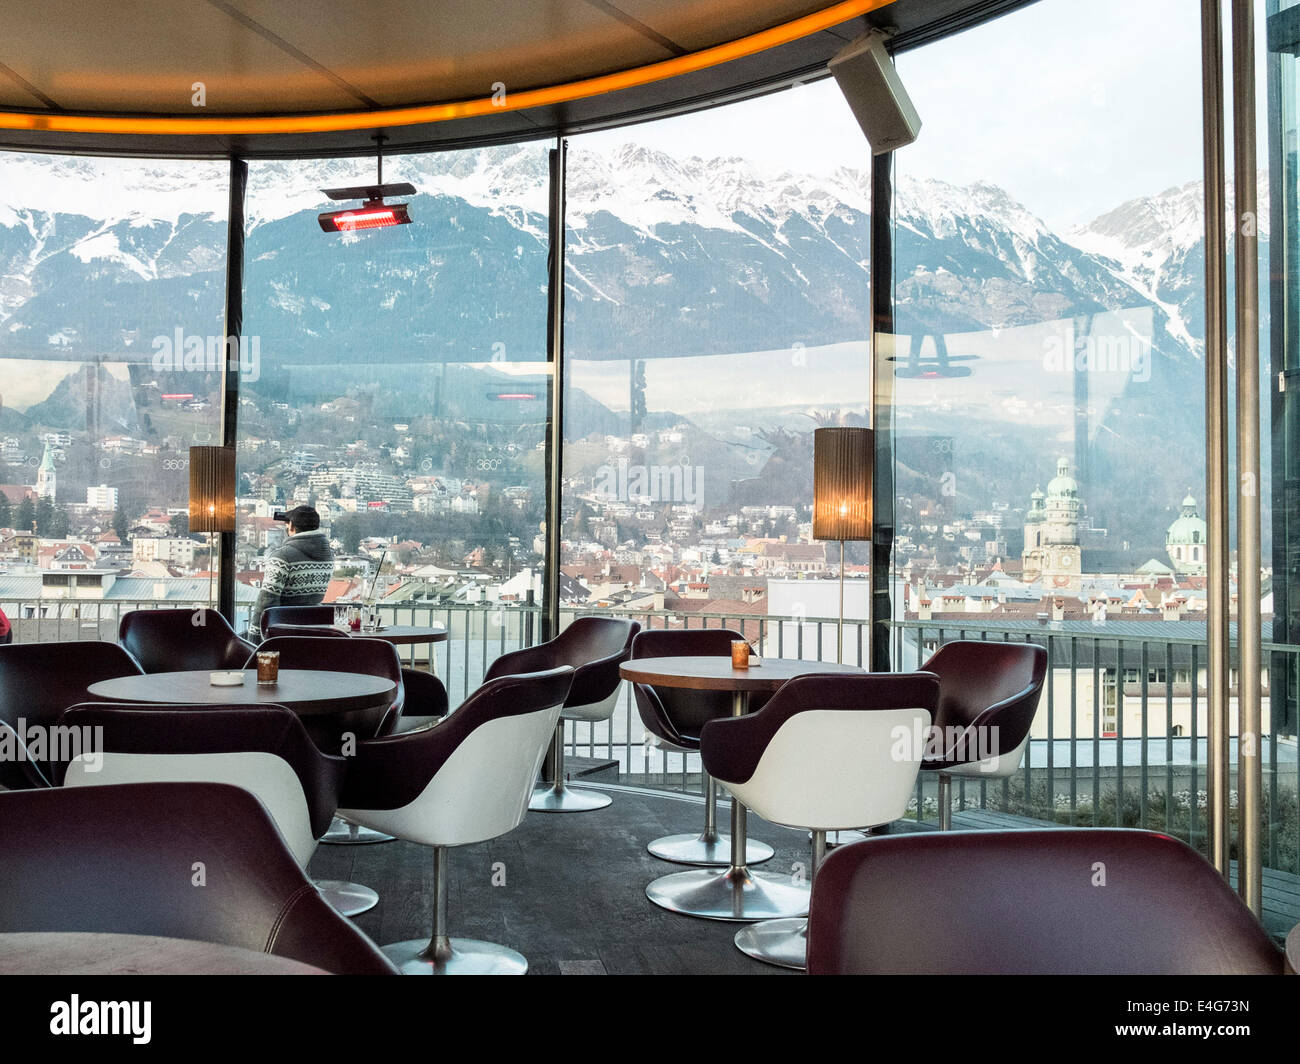 Cafe/Bar 360 Grad - Innsbruck, Tirol, Austria Stock Photo